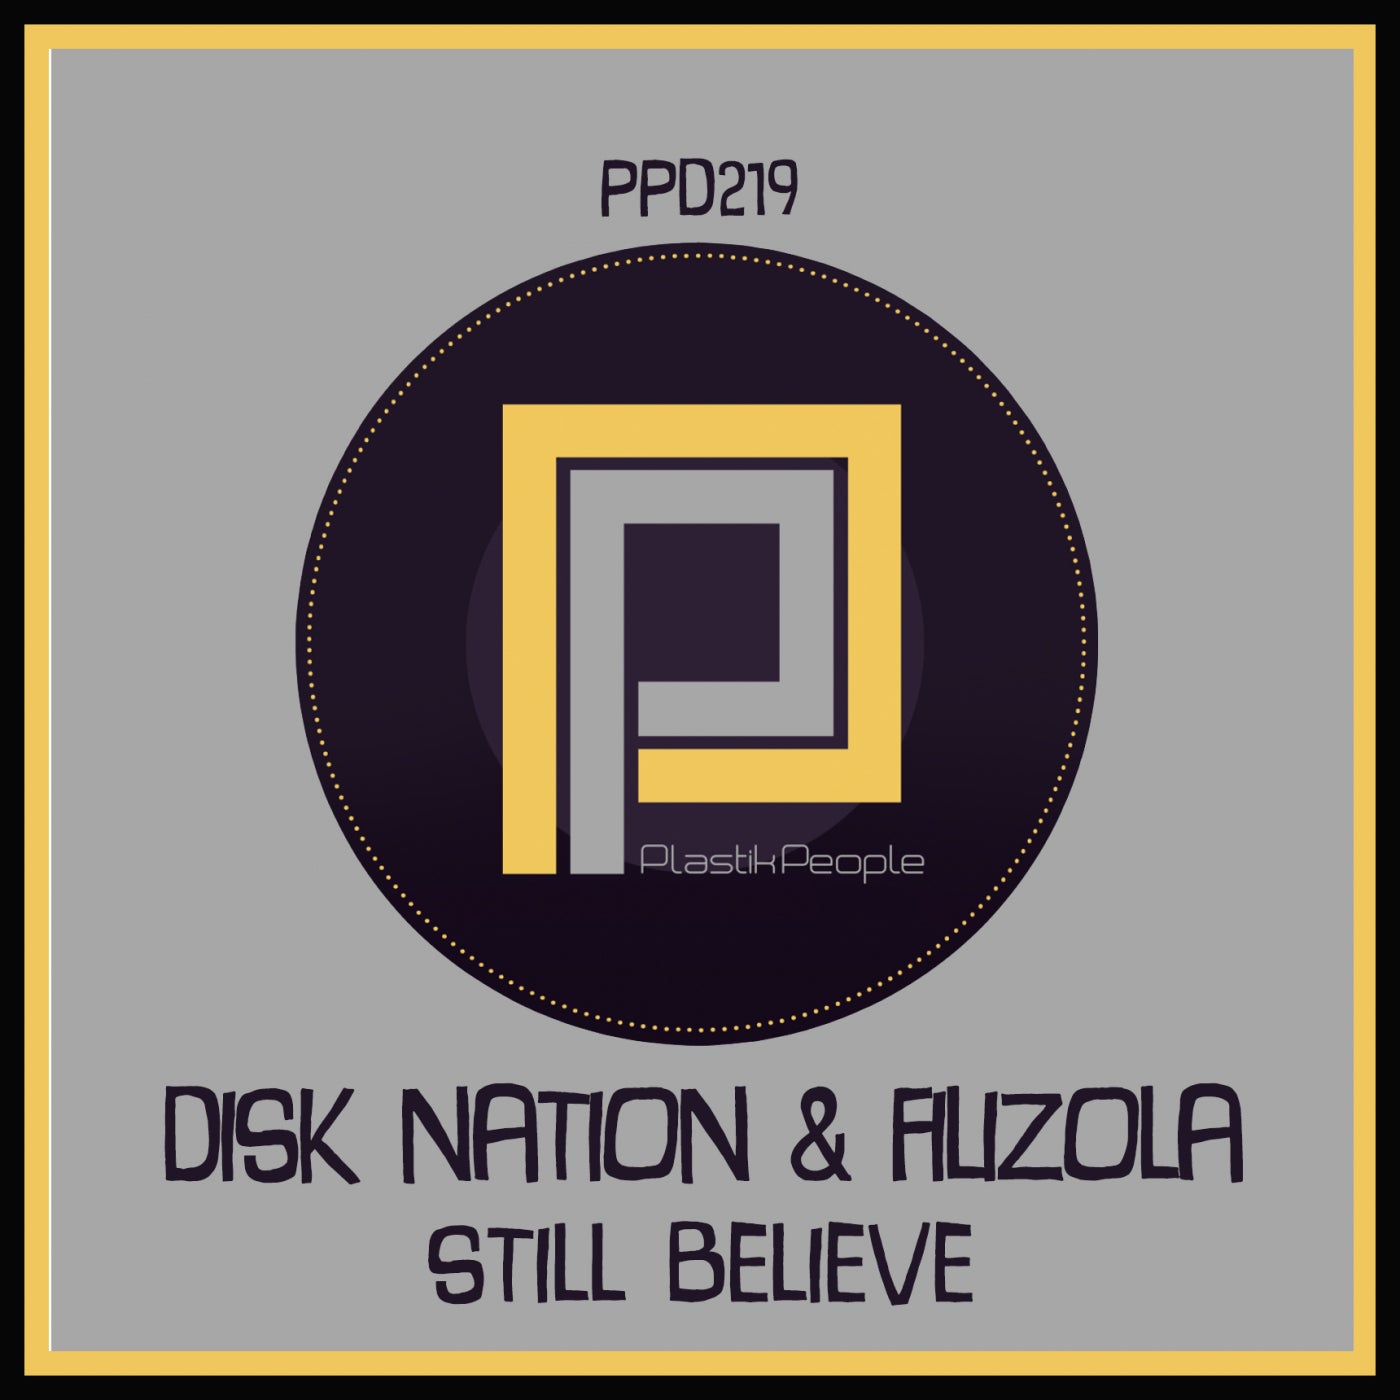 Disk Nation, Filizola - Still Believe [PPD219]